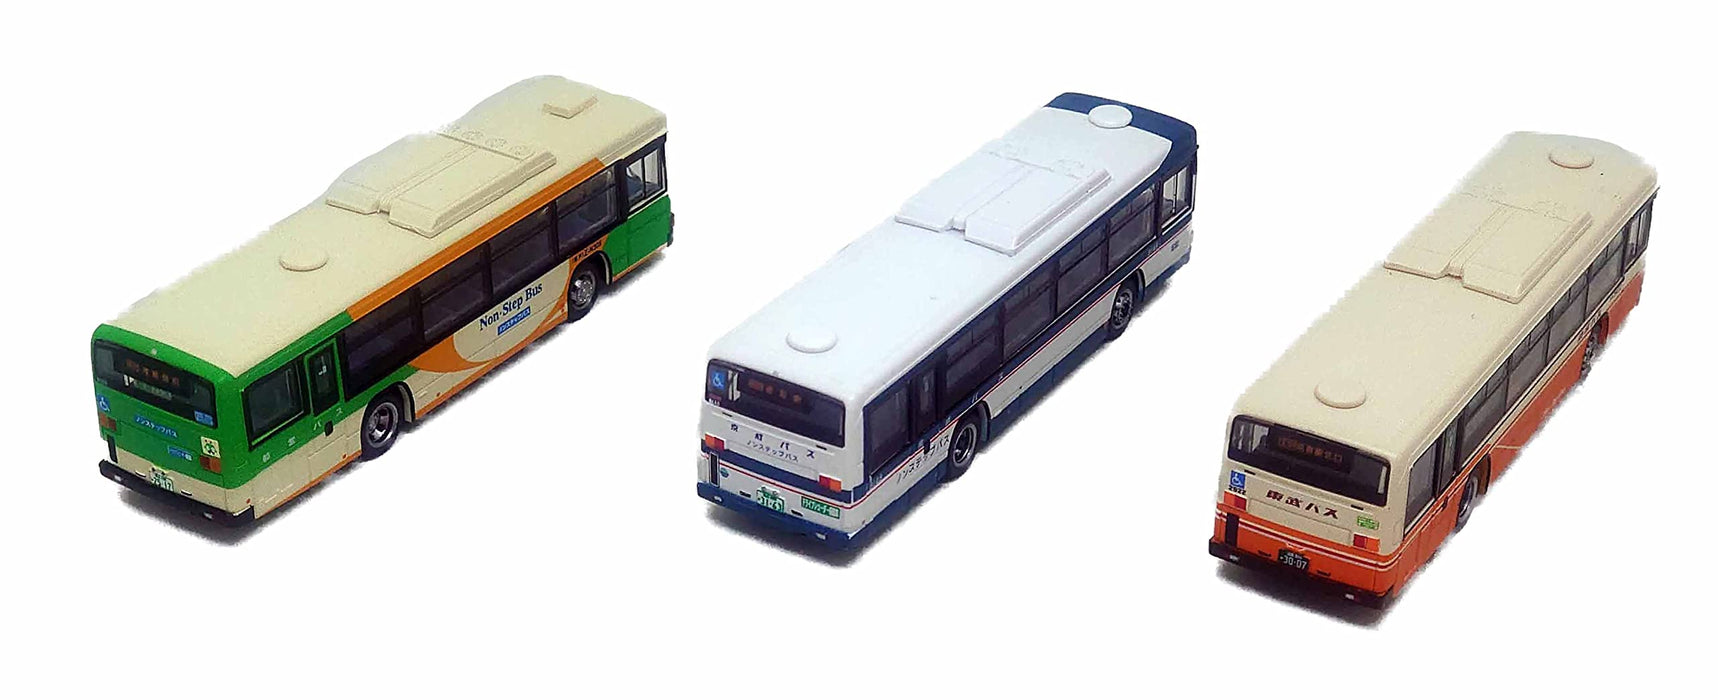 Tomytec Bus Collection 3-teiliges Set, fährt in der Katsushika A-Serie